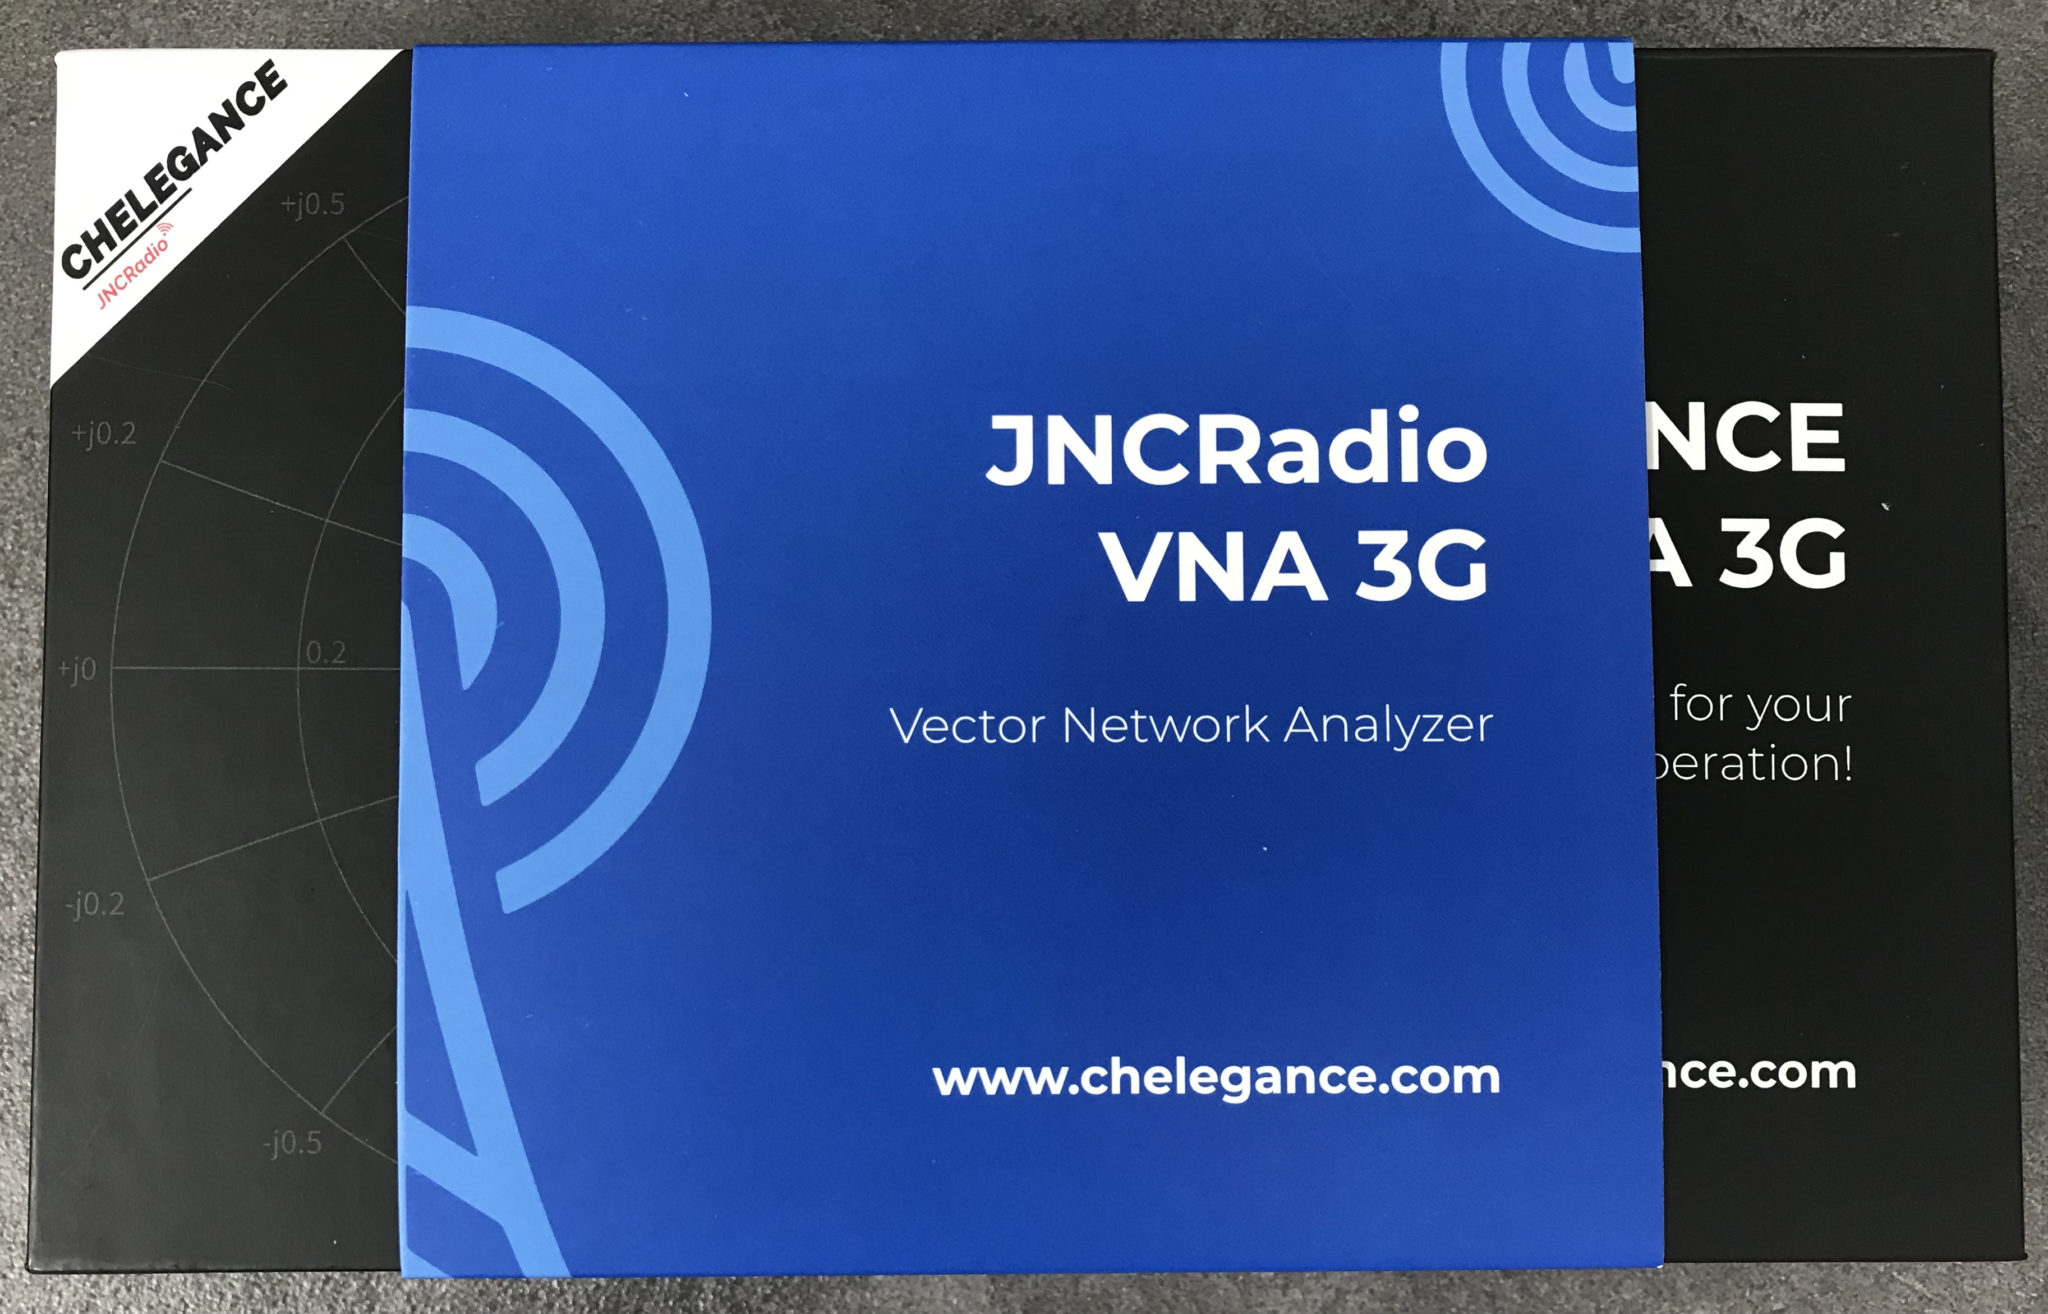 M0AWS - JNCRadio VNA 3G Packaging